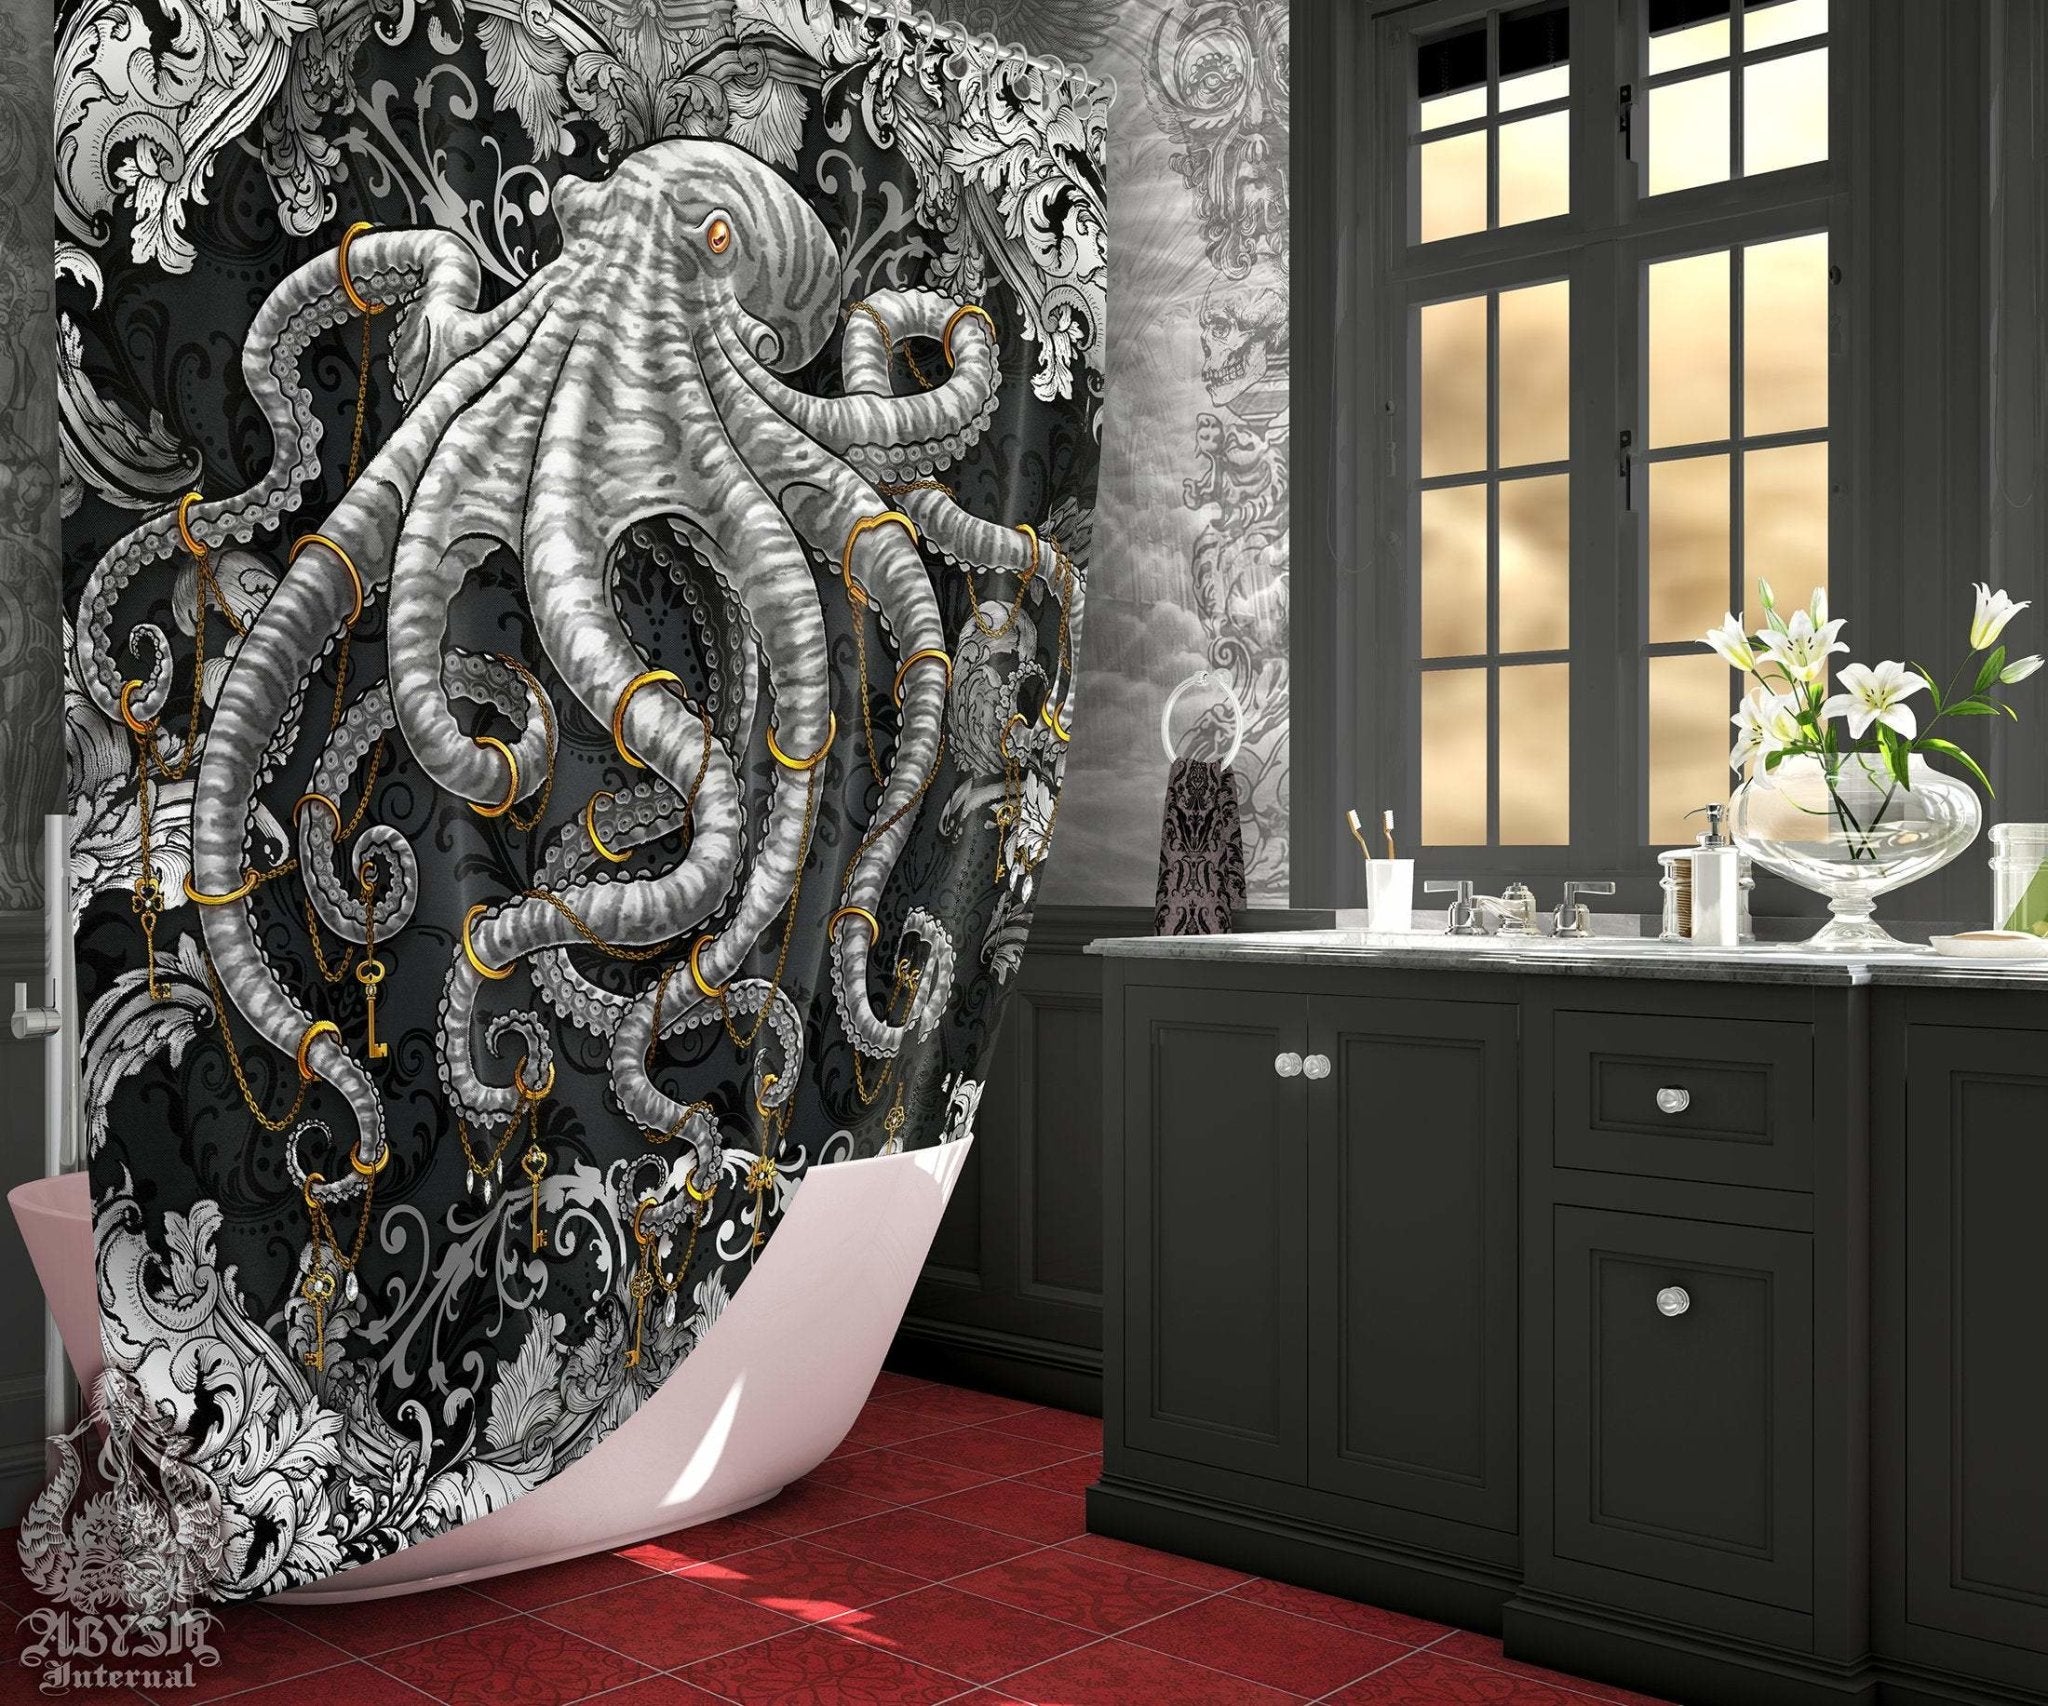 Octopus Shower Curtain, Coastal Home and Bathroom Decor - Silver & Black - Abysm Internal